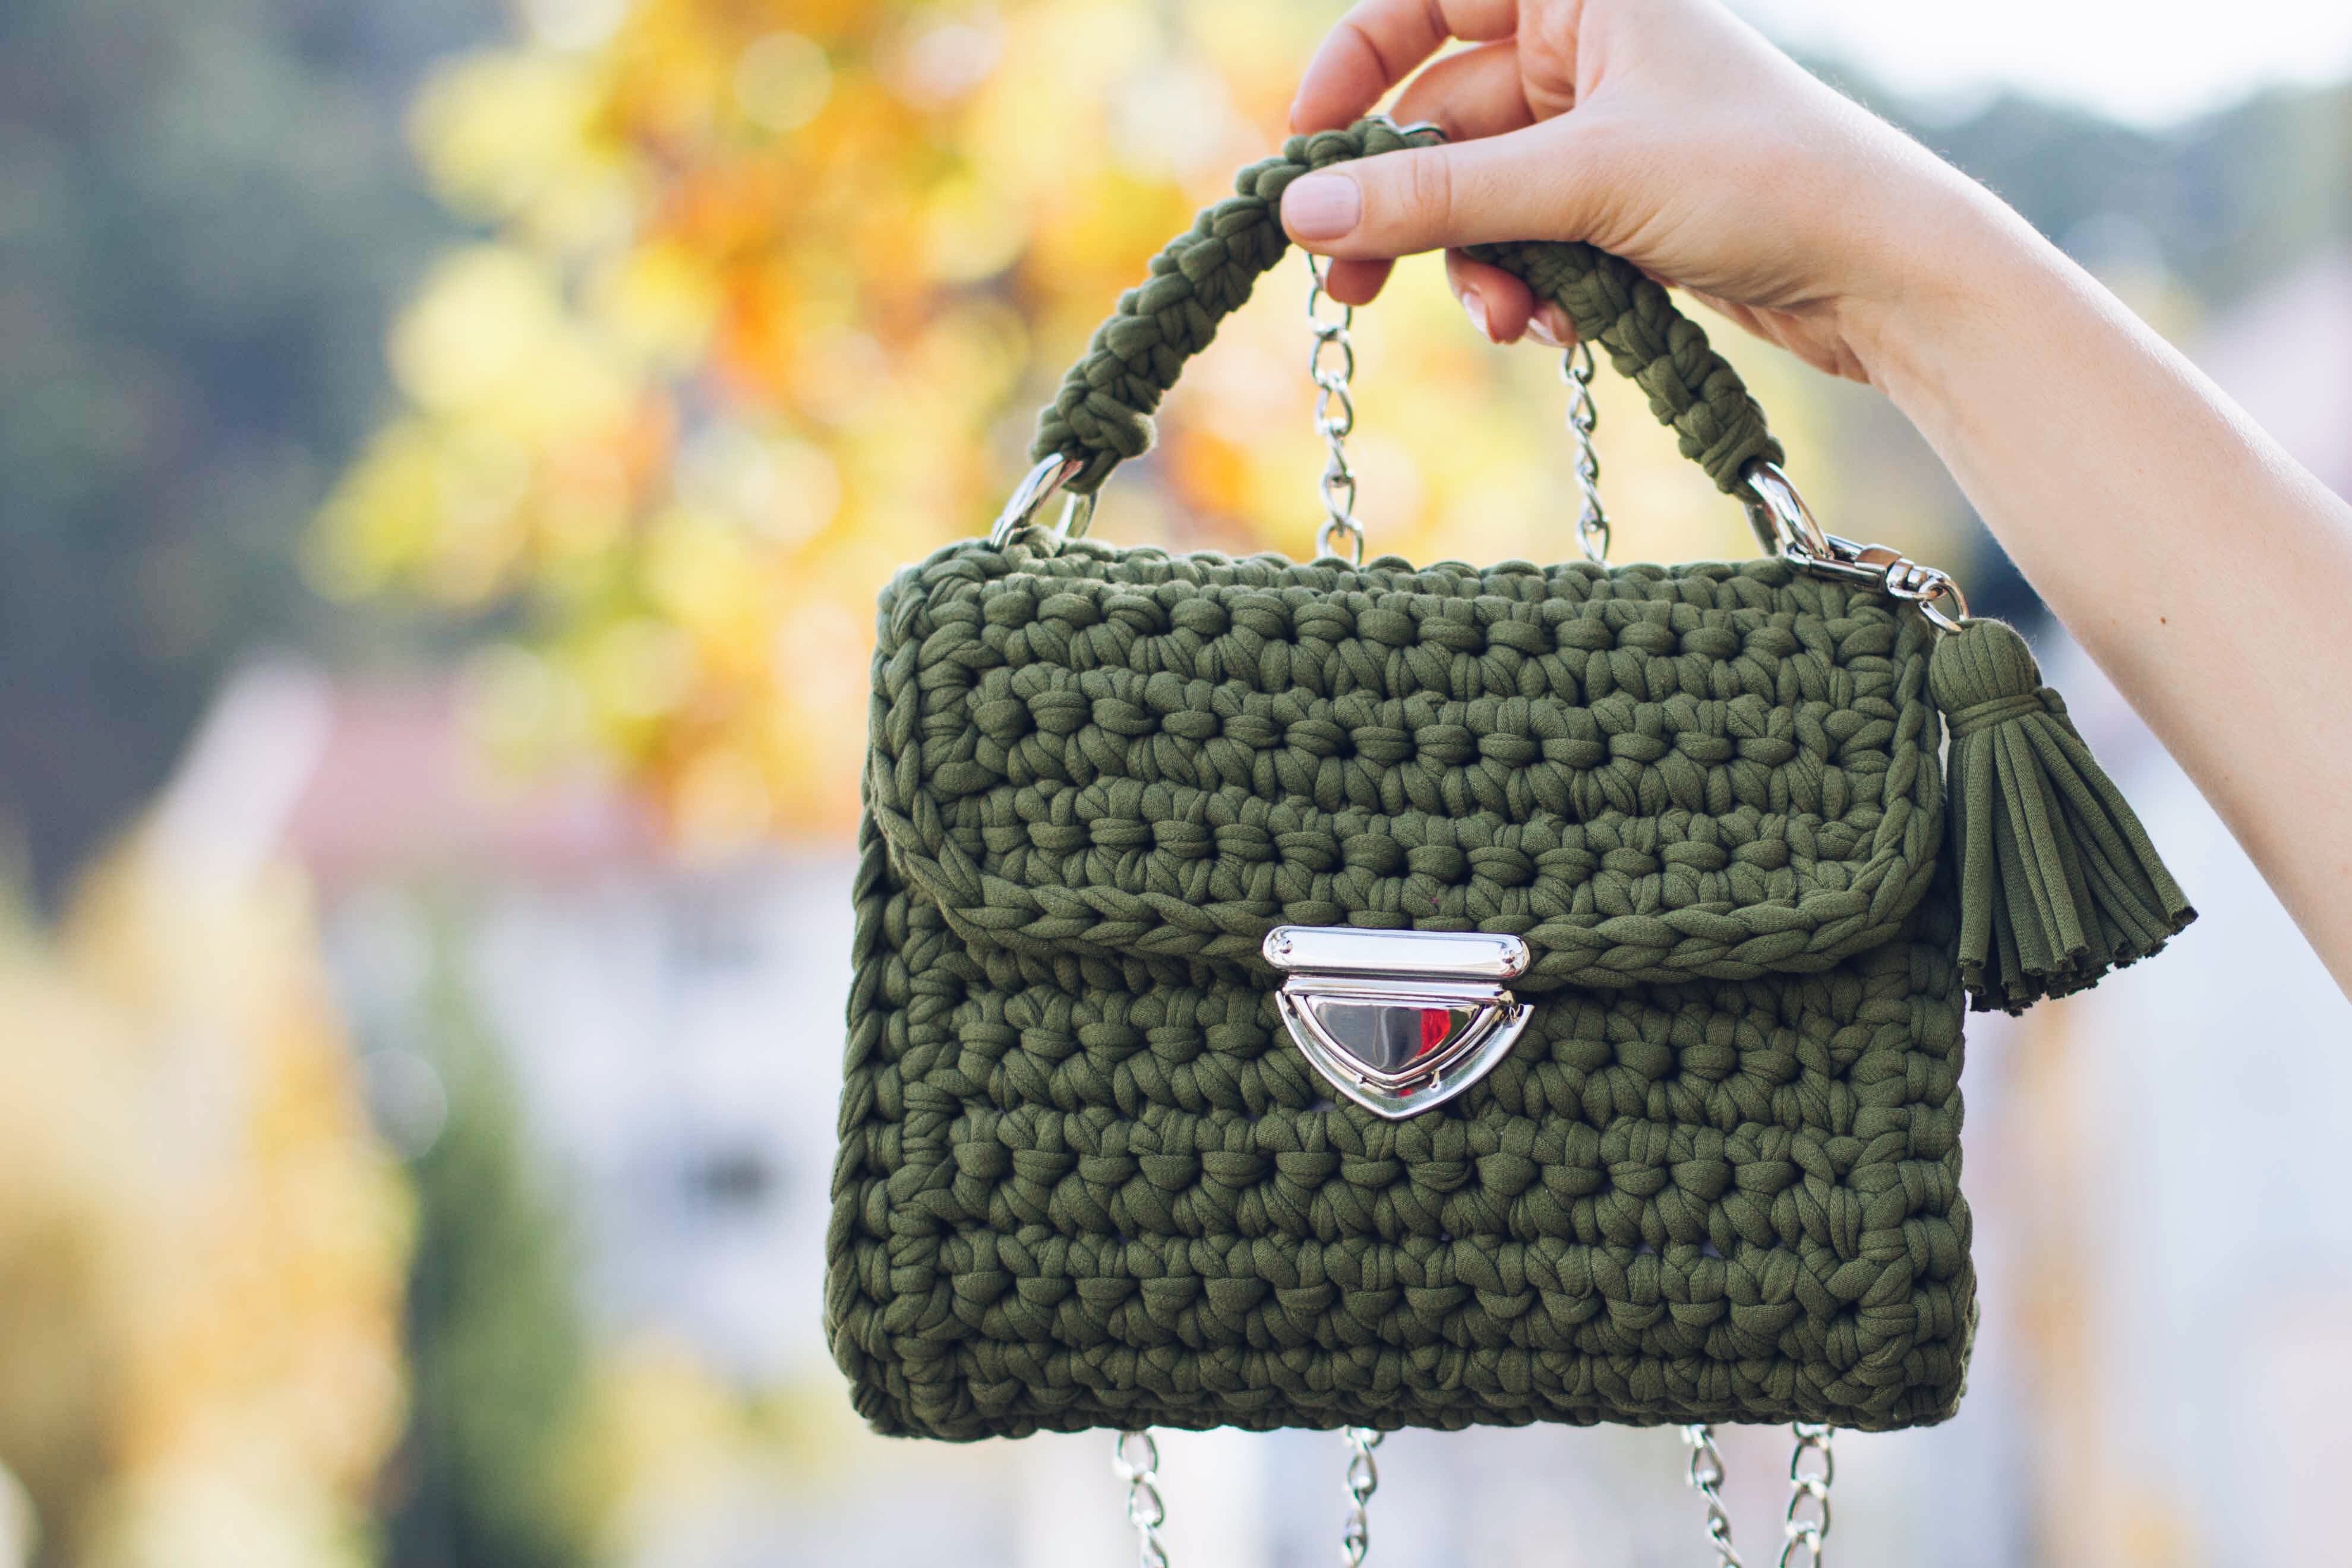 Little treasure: crochet bag